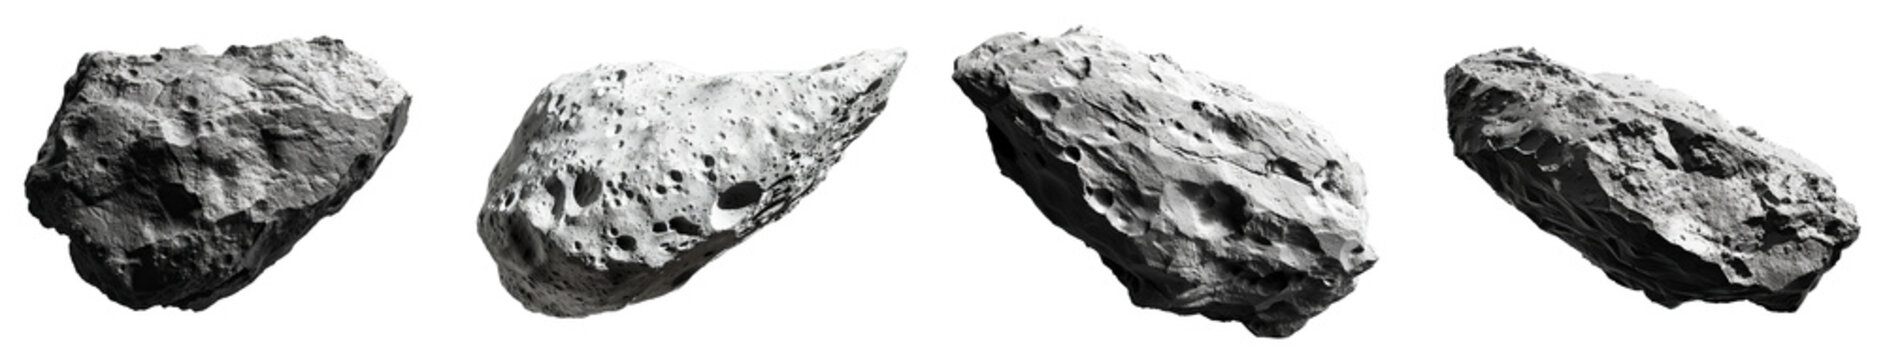 Set of asteroids, PNG set